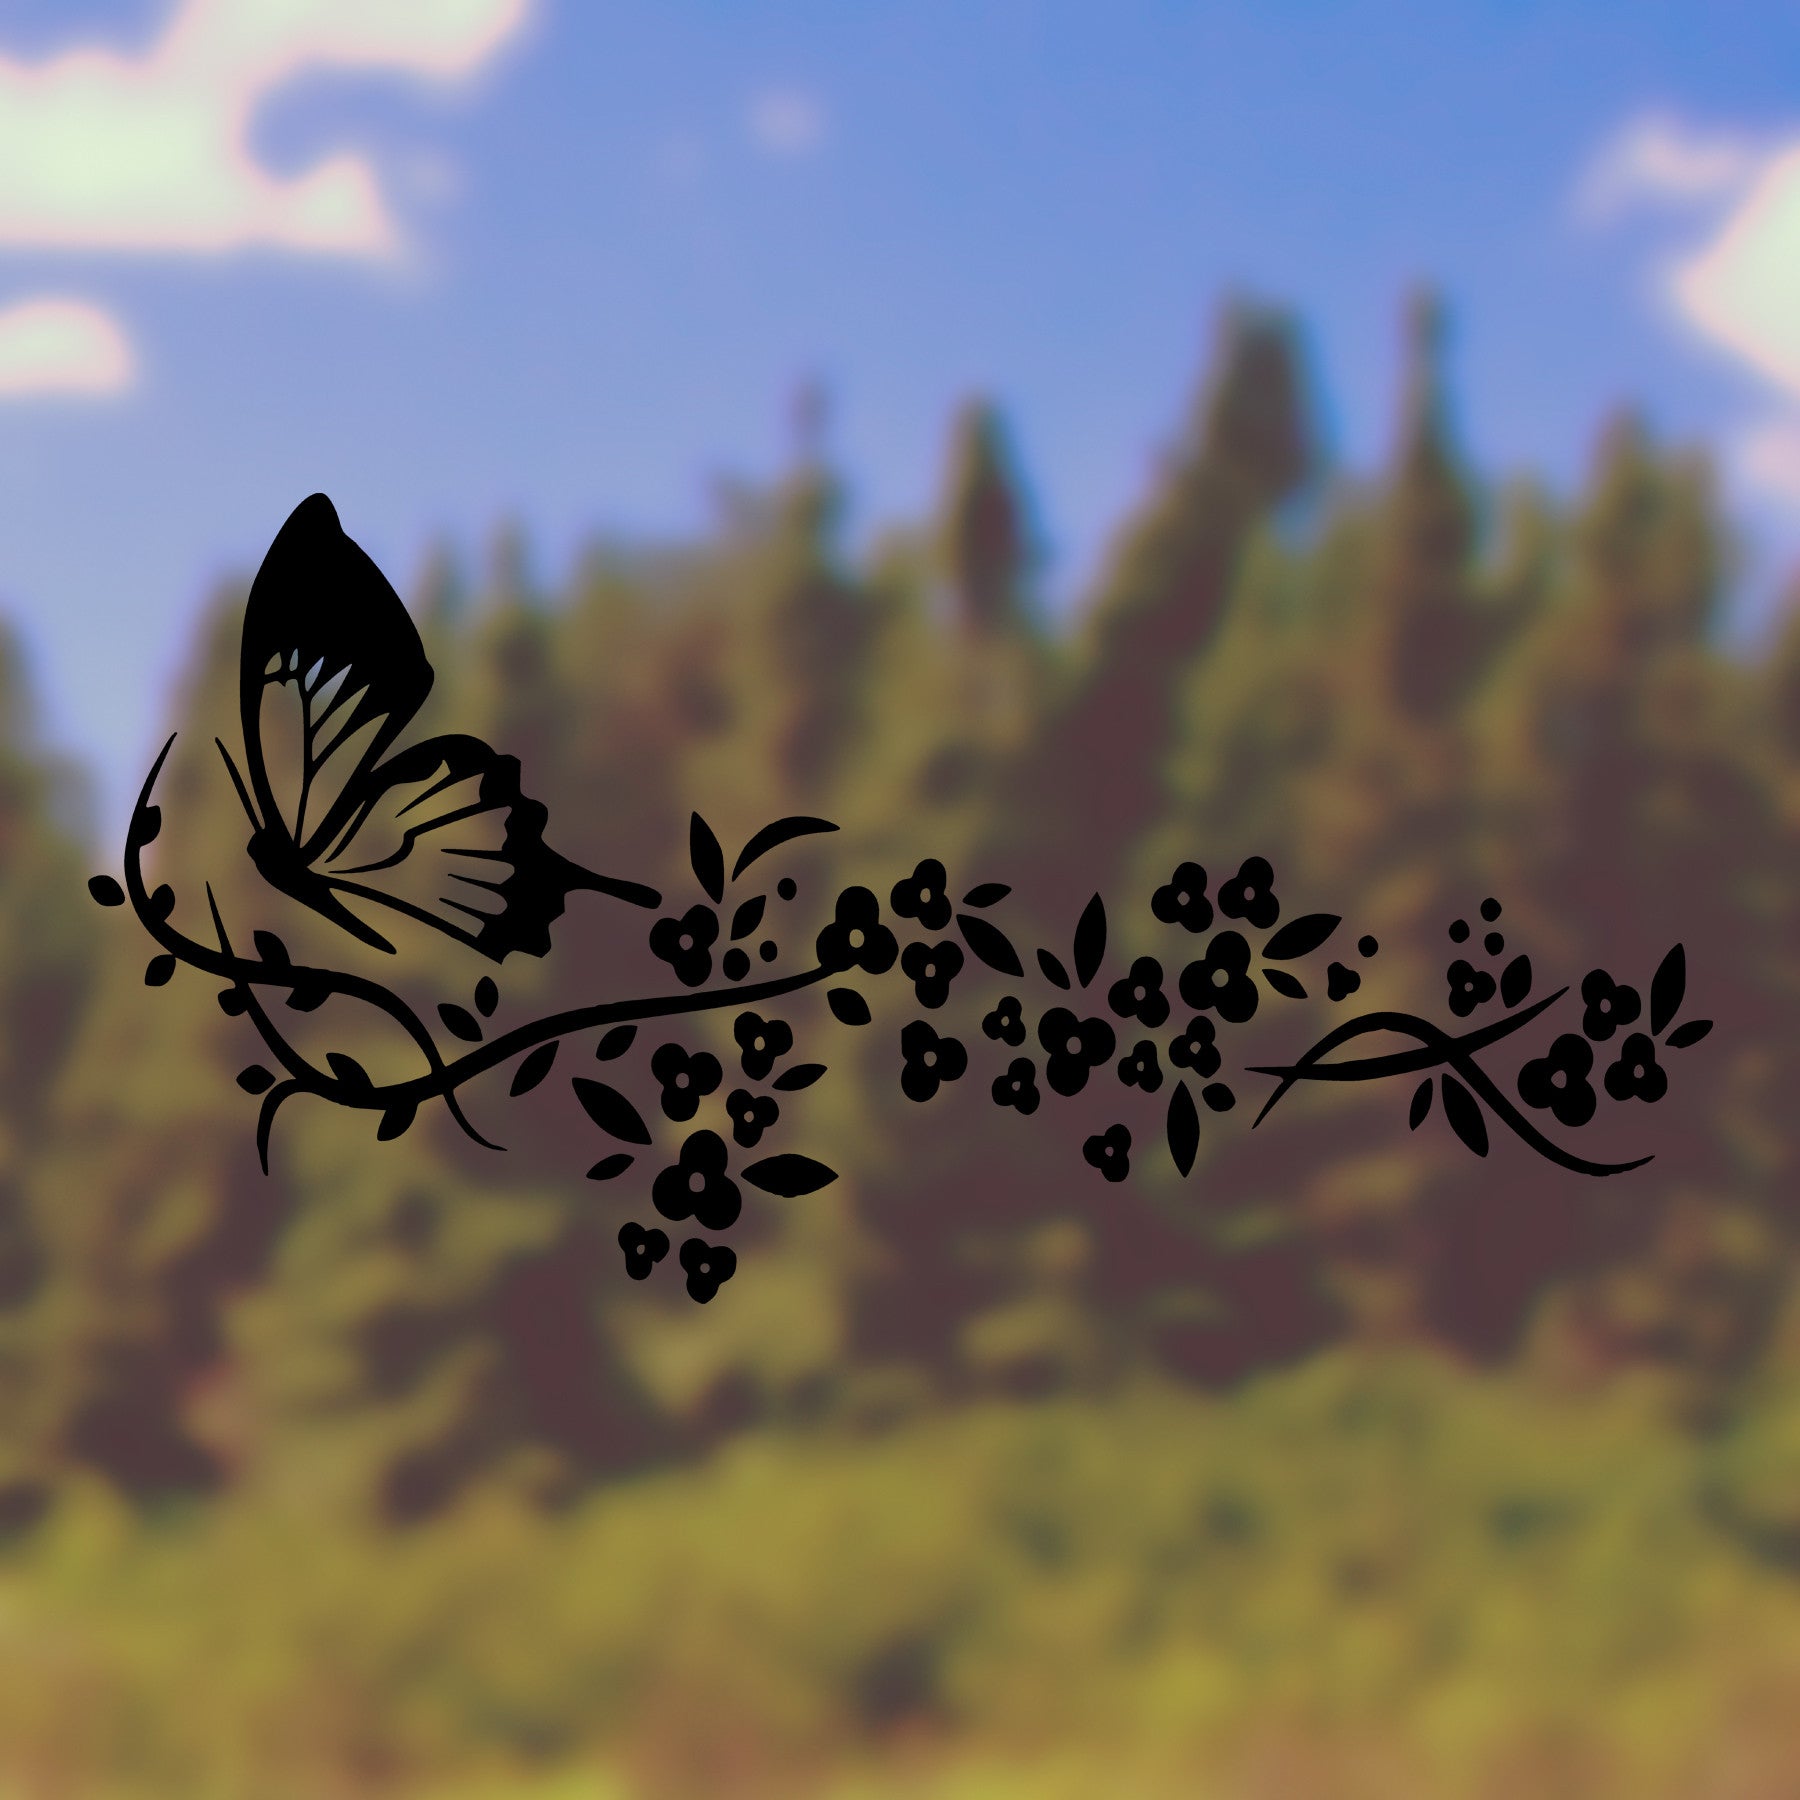 Butterfly on a branch | Bumper sticker - Adnil Creations